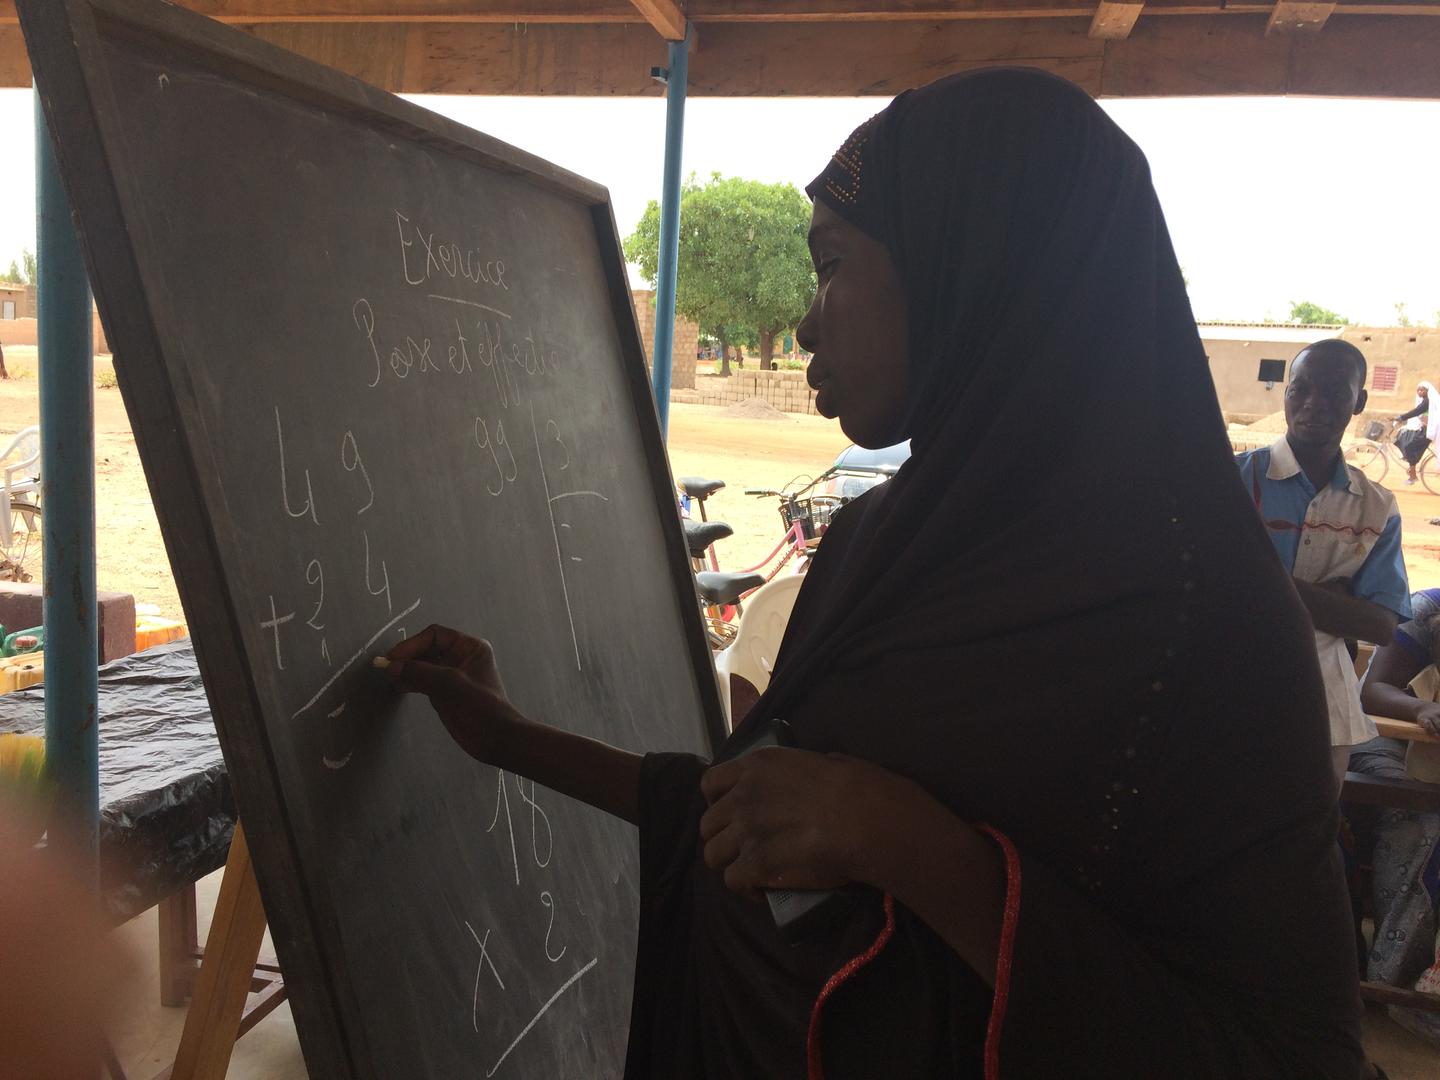 Salvation Army teaching literacy skills in Burkina Faso